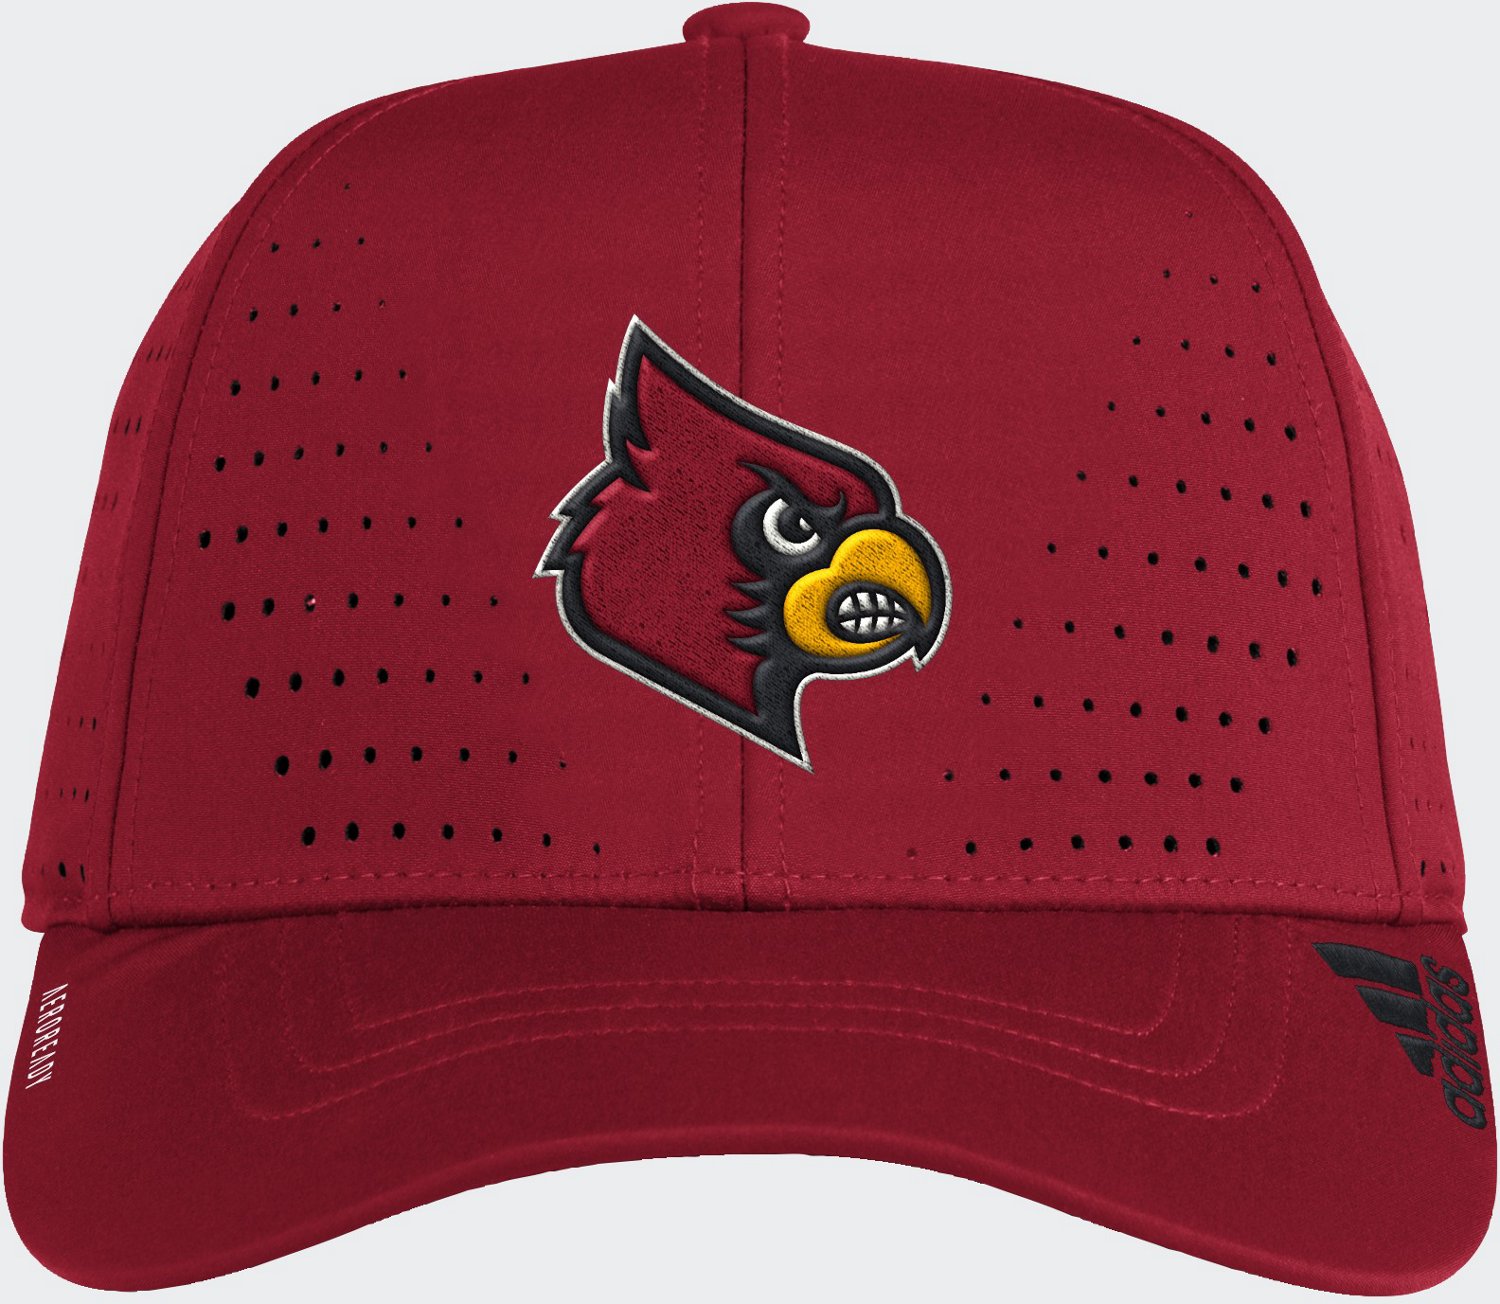 University of Louisville adidas Hats, Snapback, Louisville Cardinals Caps